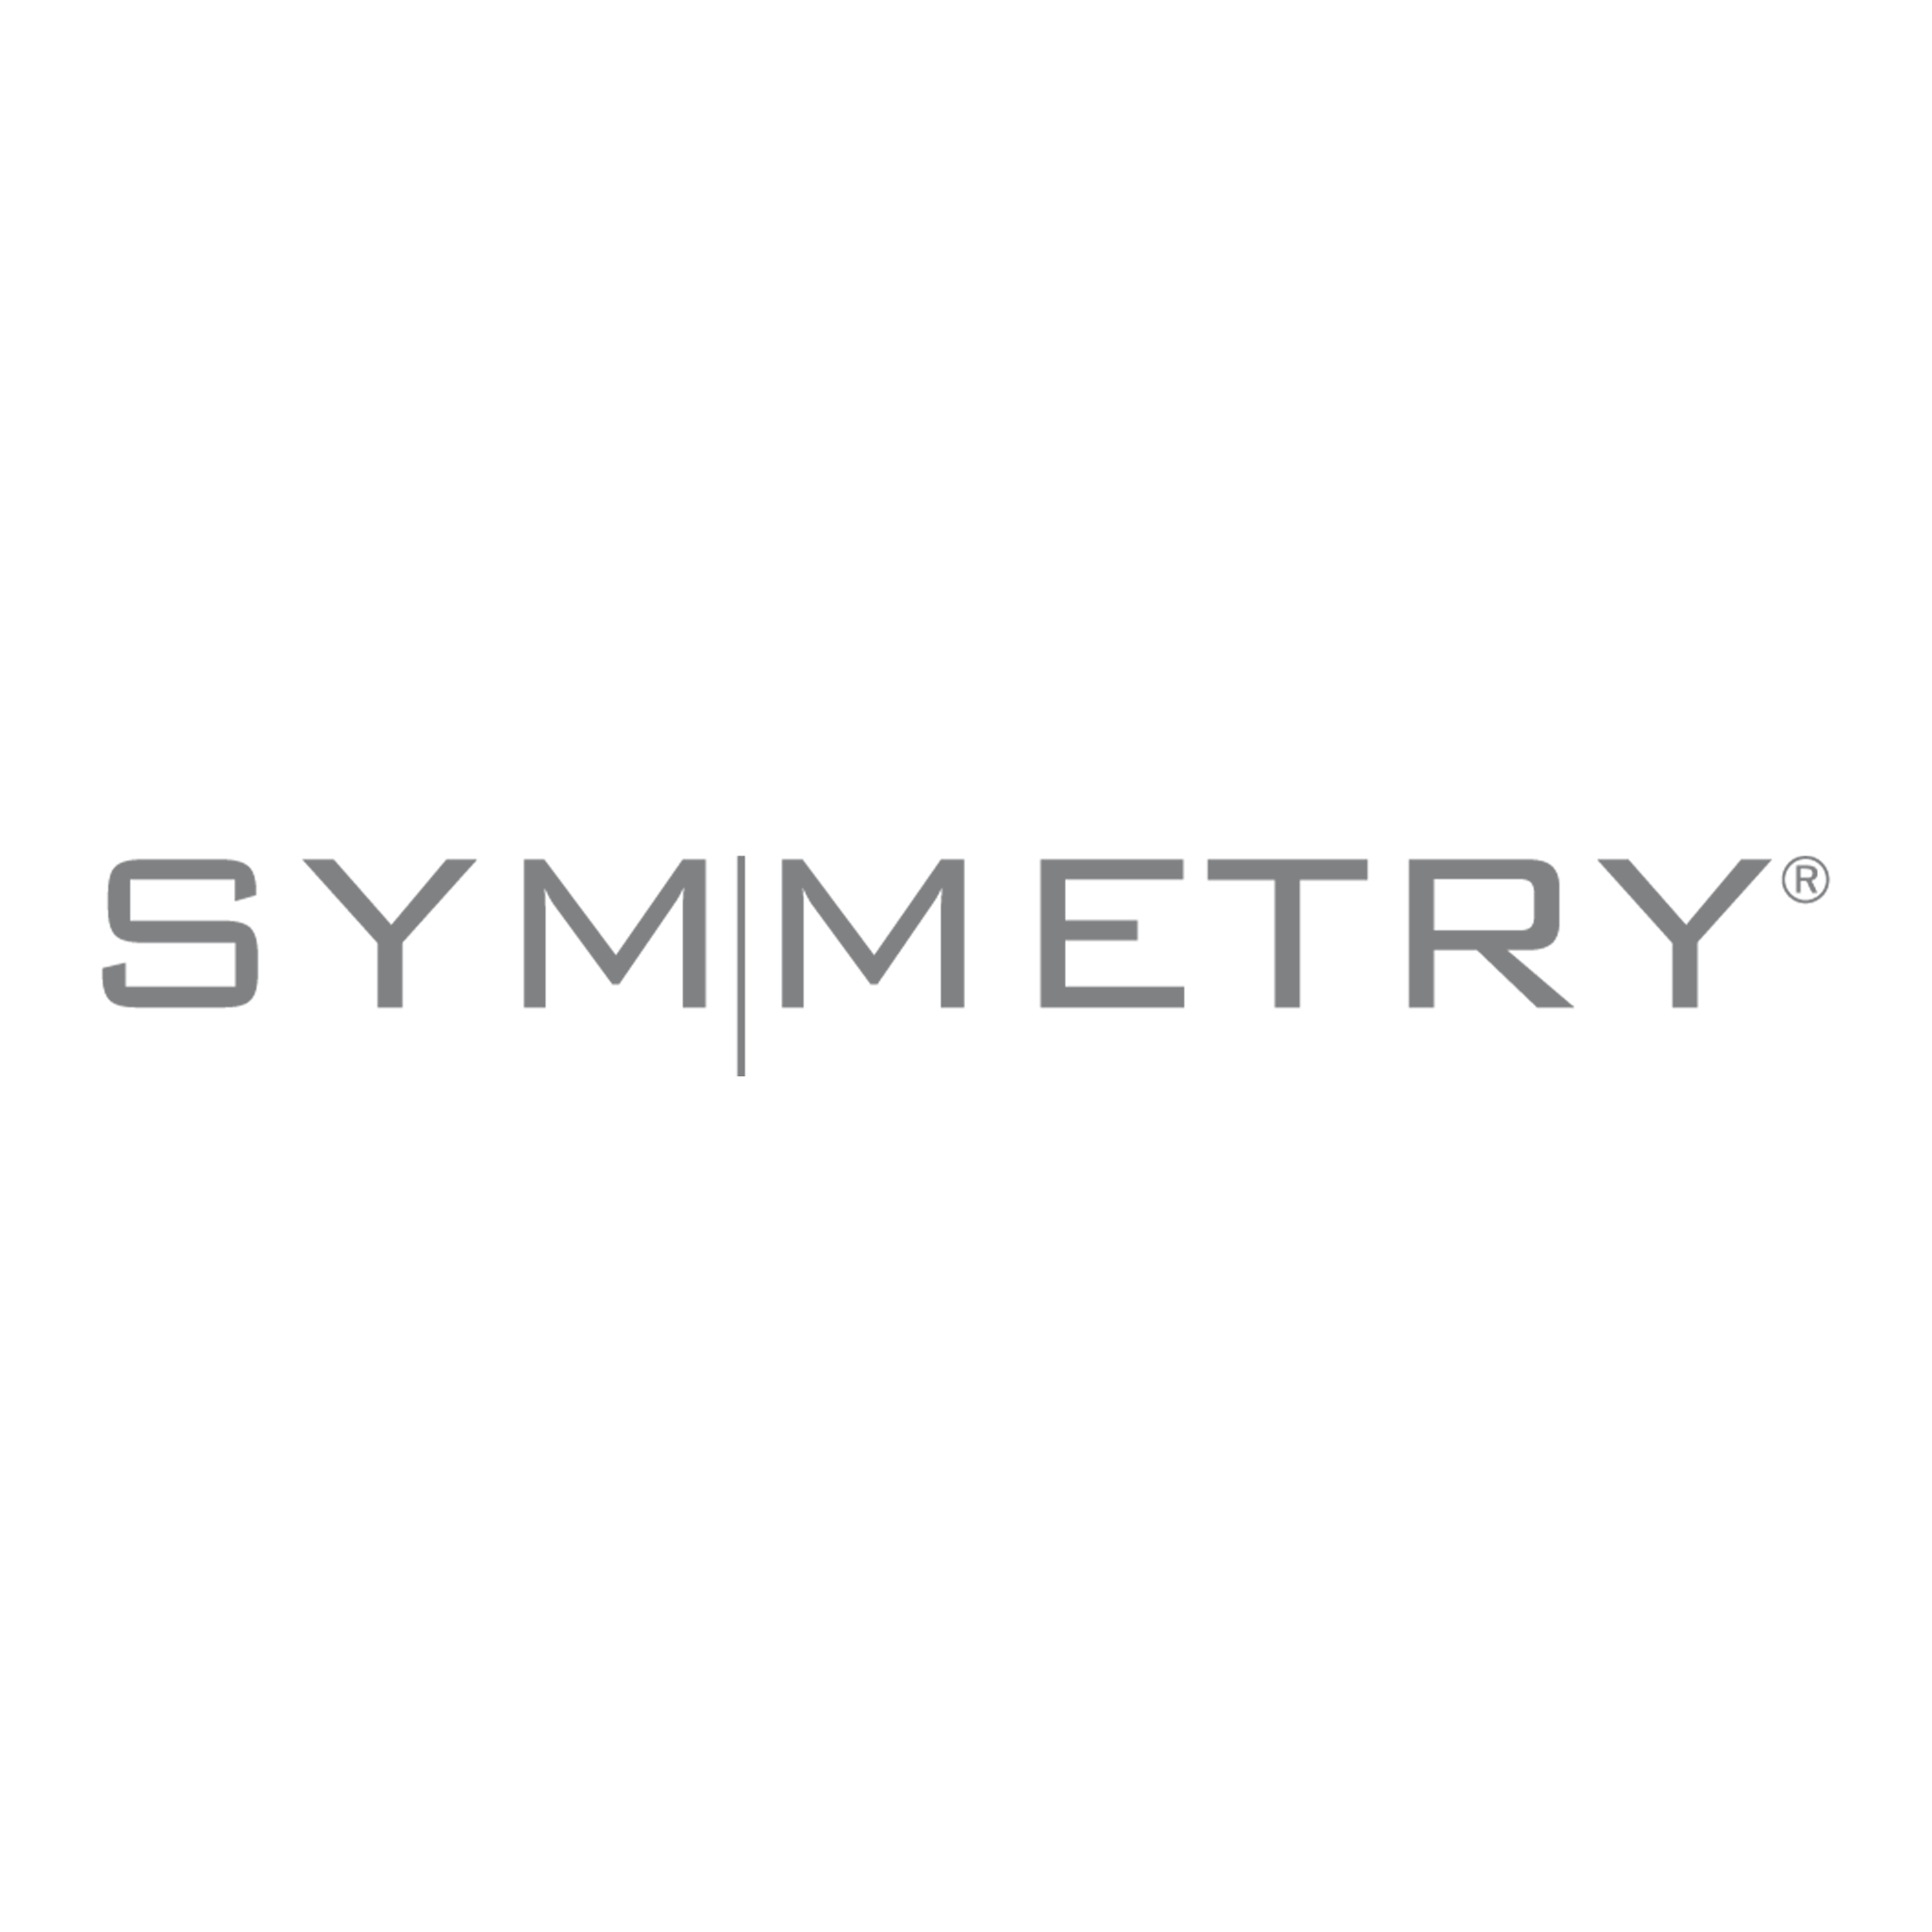 Symmetry Partners